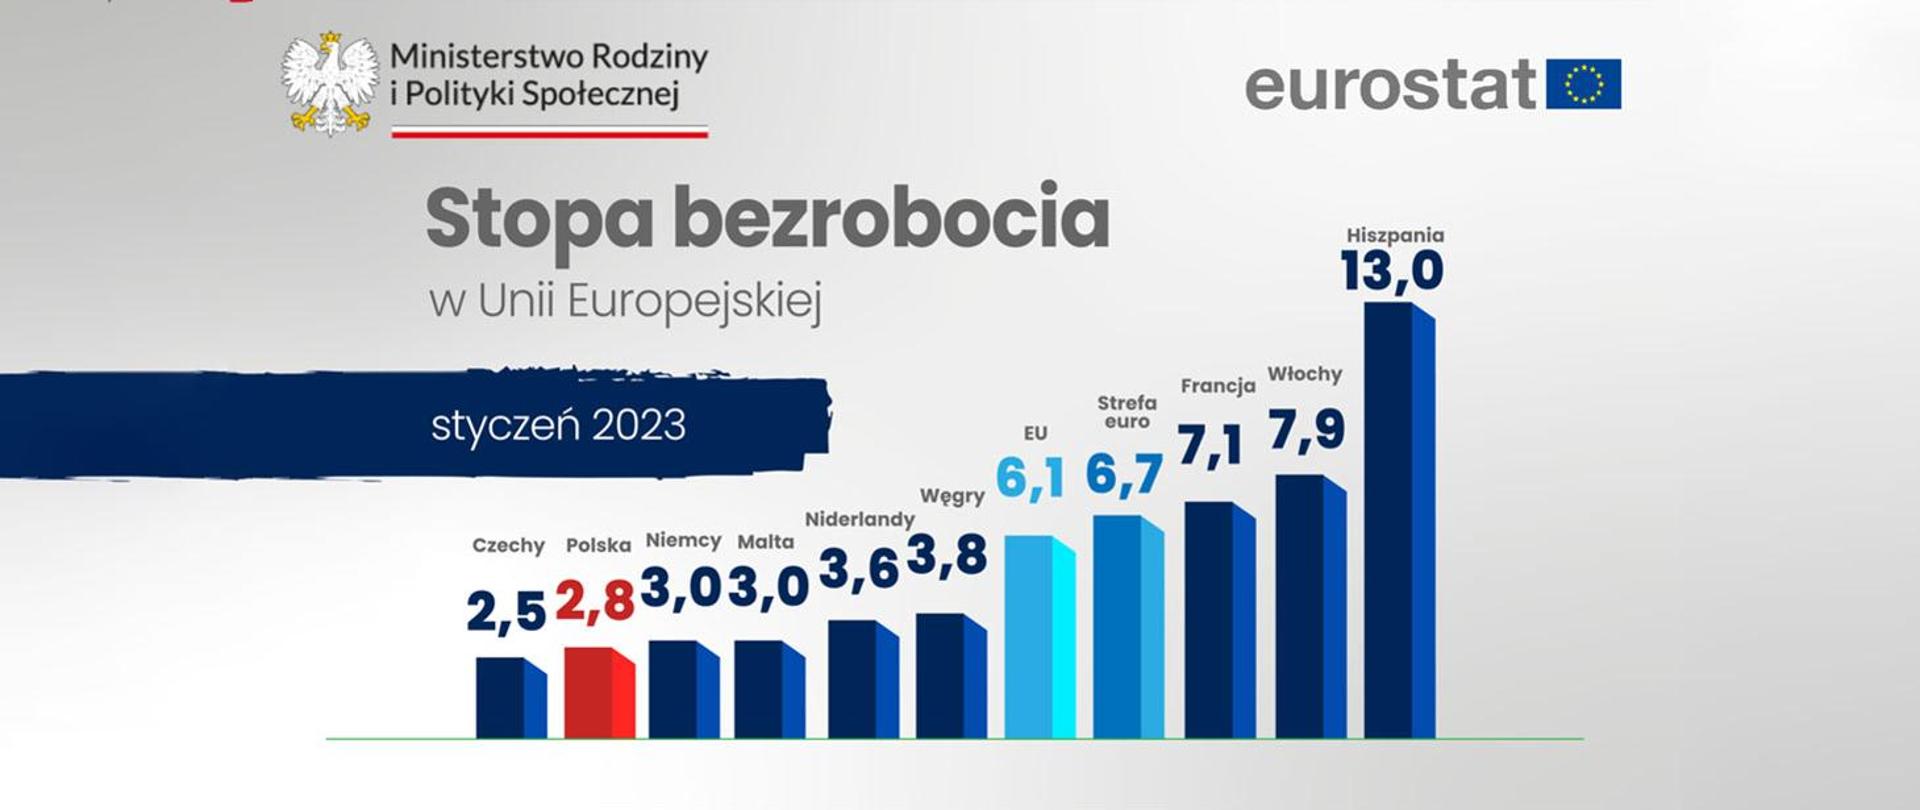 Eurostat: Poland with even lower unemployment